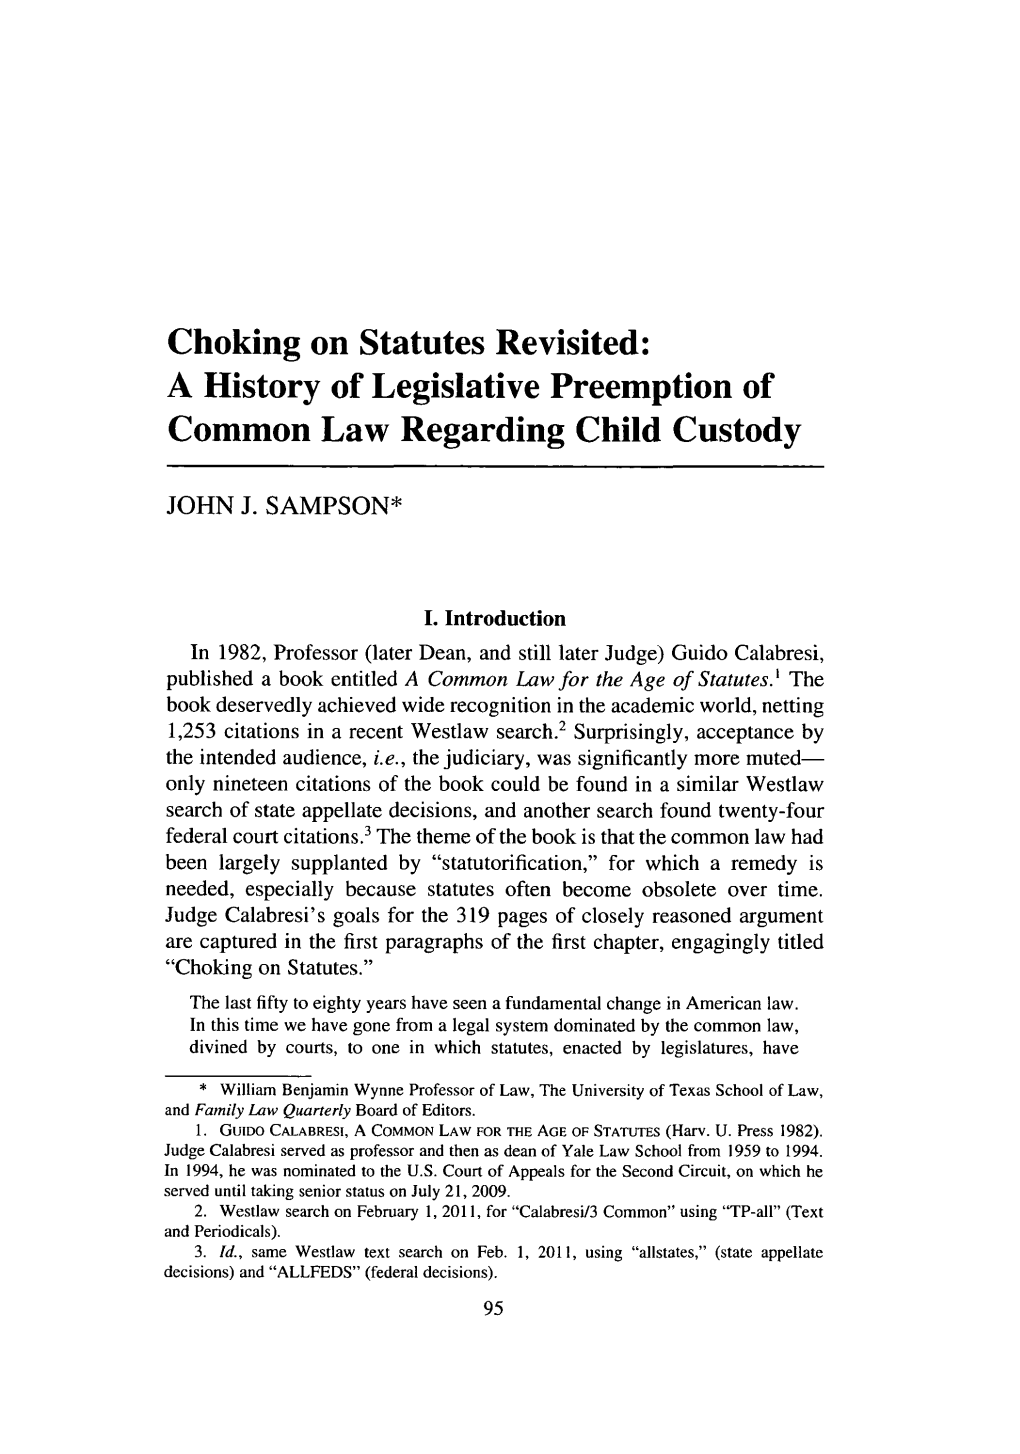 Choking on Statutes Revisited: a History of Legislative Preemption of Common Law Regarding Child Custody